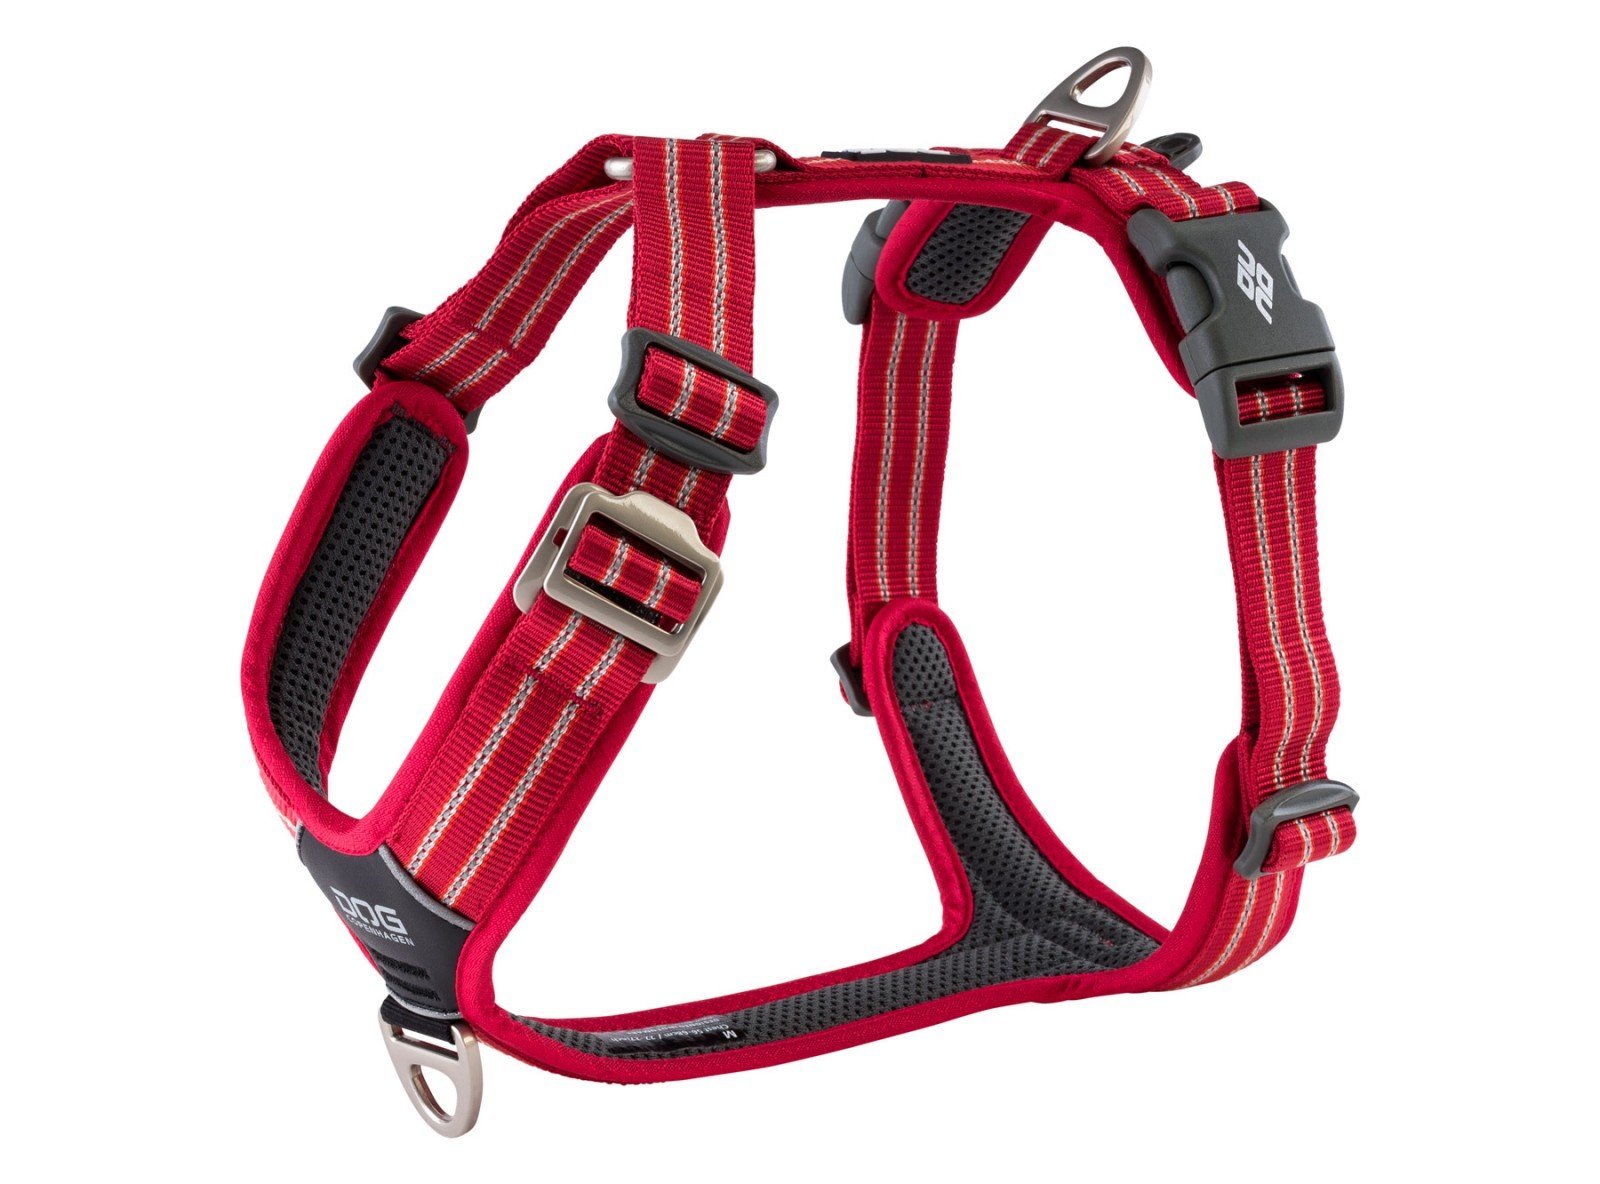 Dog Copenhagen - Comfort Walk Pro Harness - "Version" 2020 Classic red